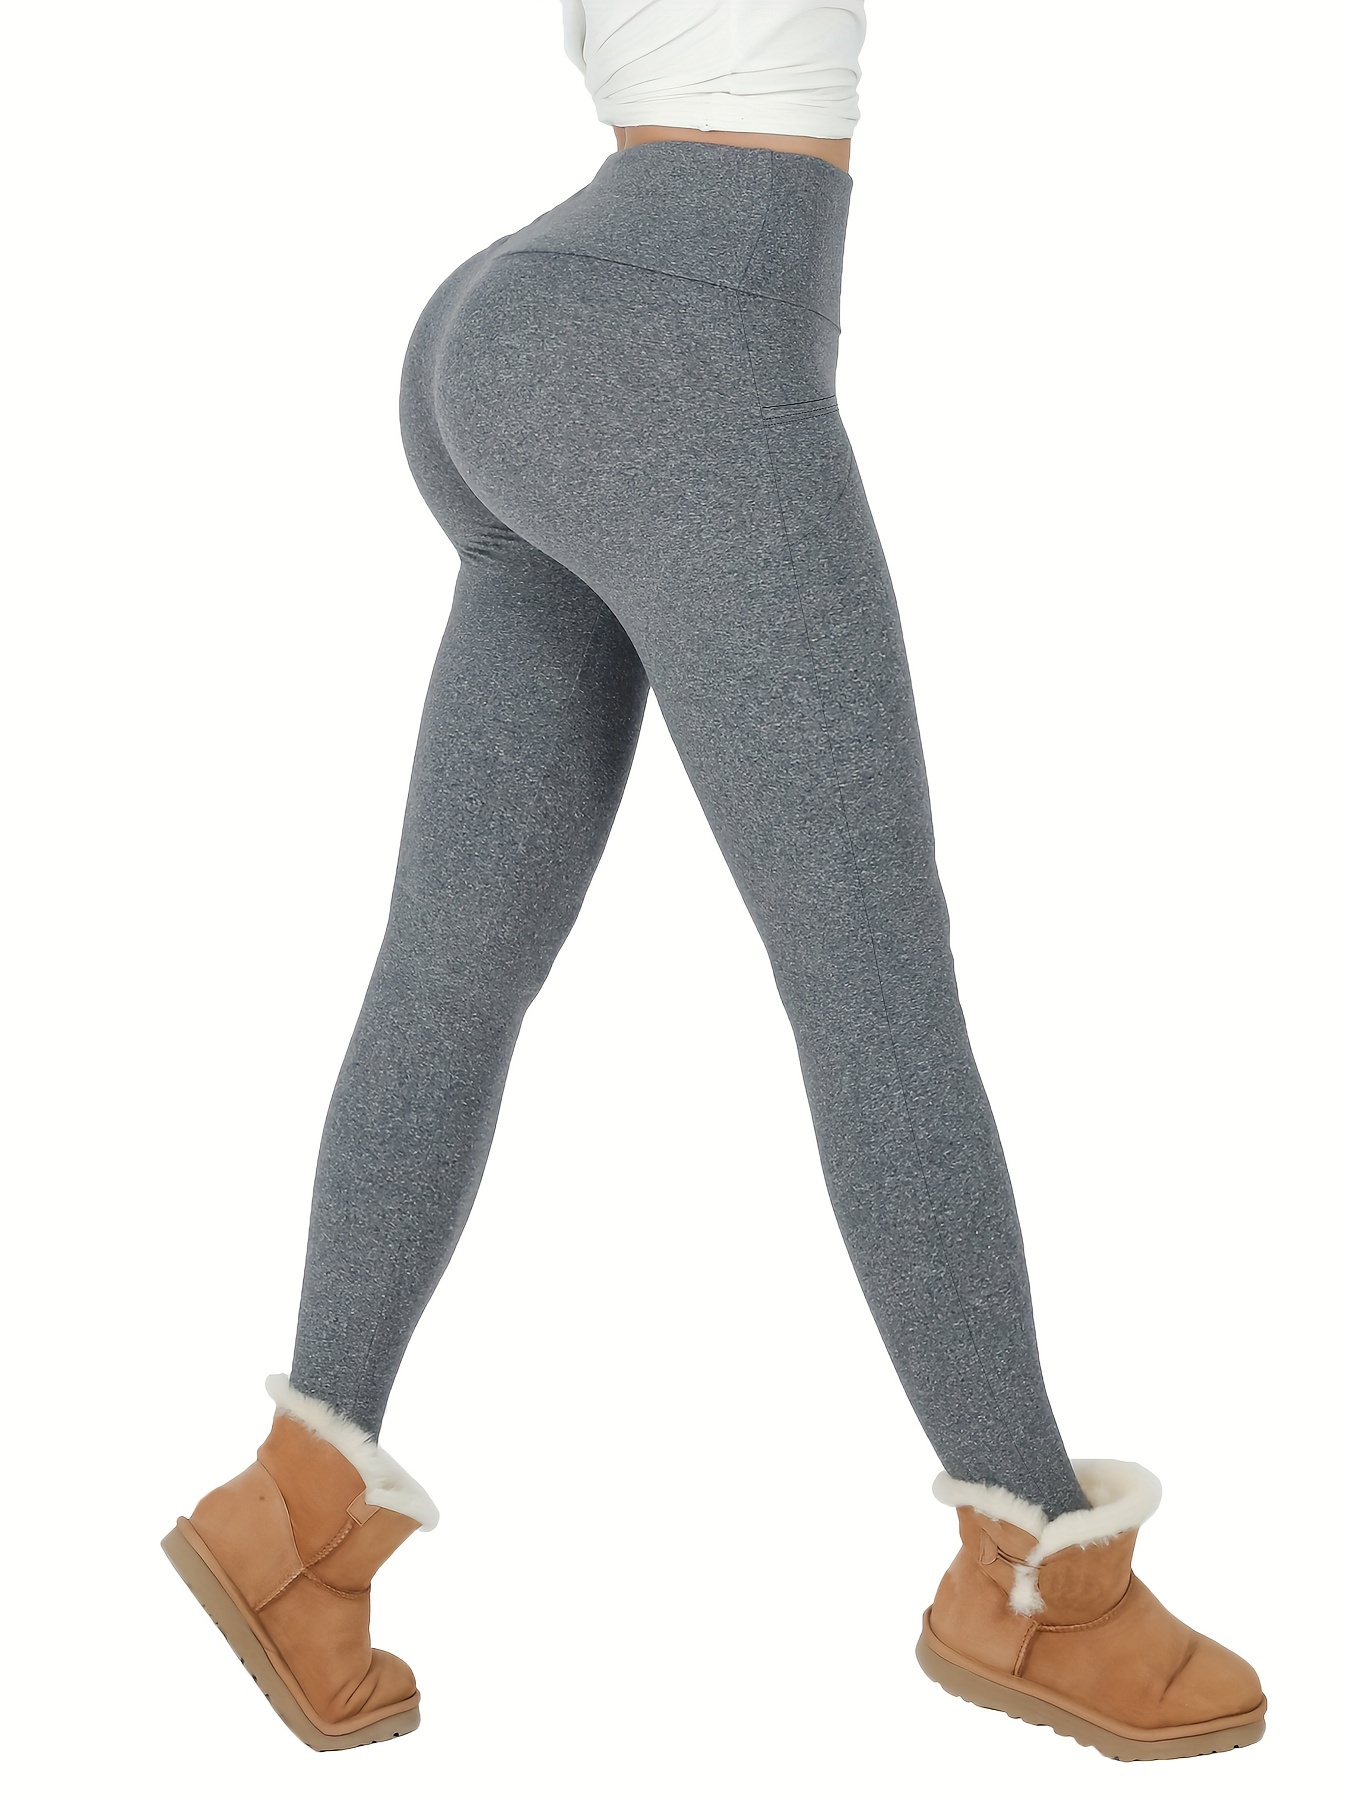 pseurrlt Fleece Lined Leggings Women Water Resistant Thermal Yoga Pants  High Waisted Warm Athletic Running Leggings Pockets 